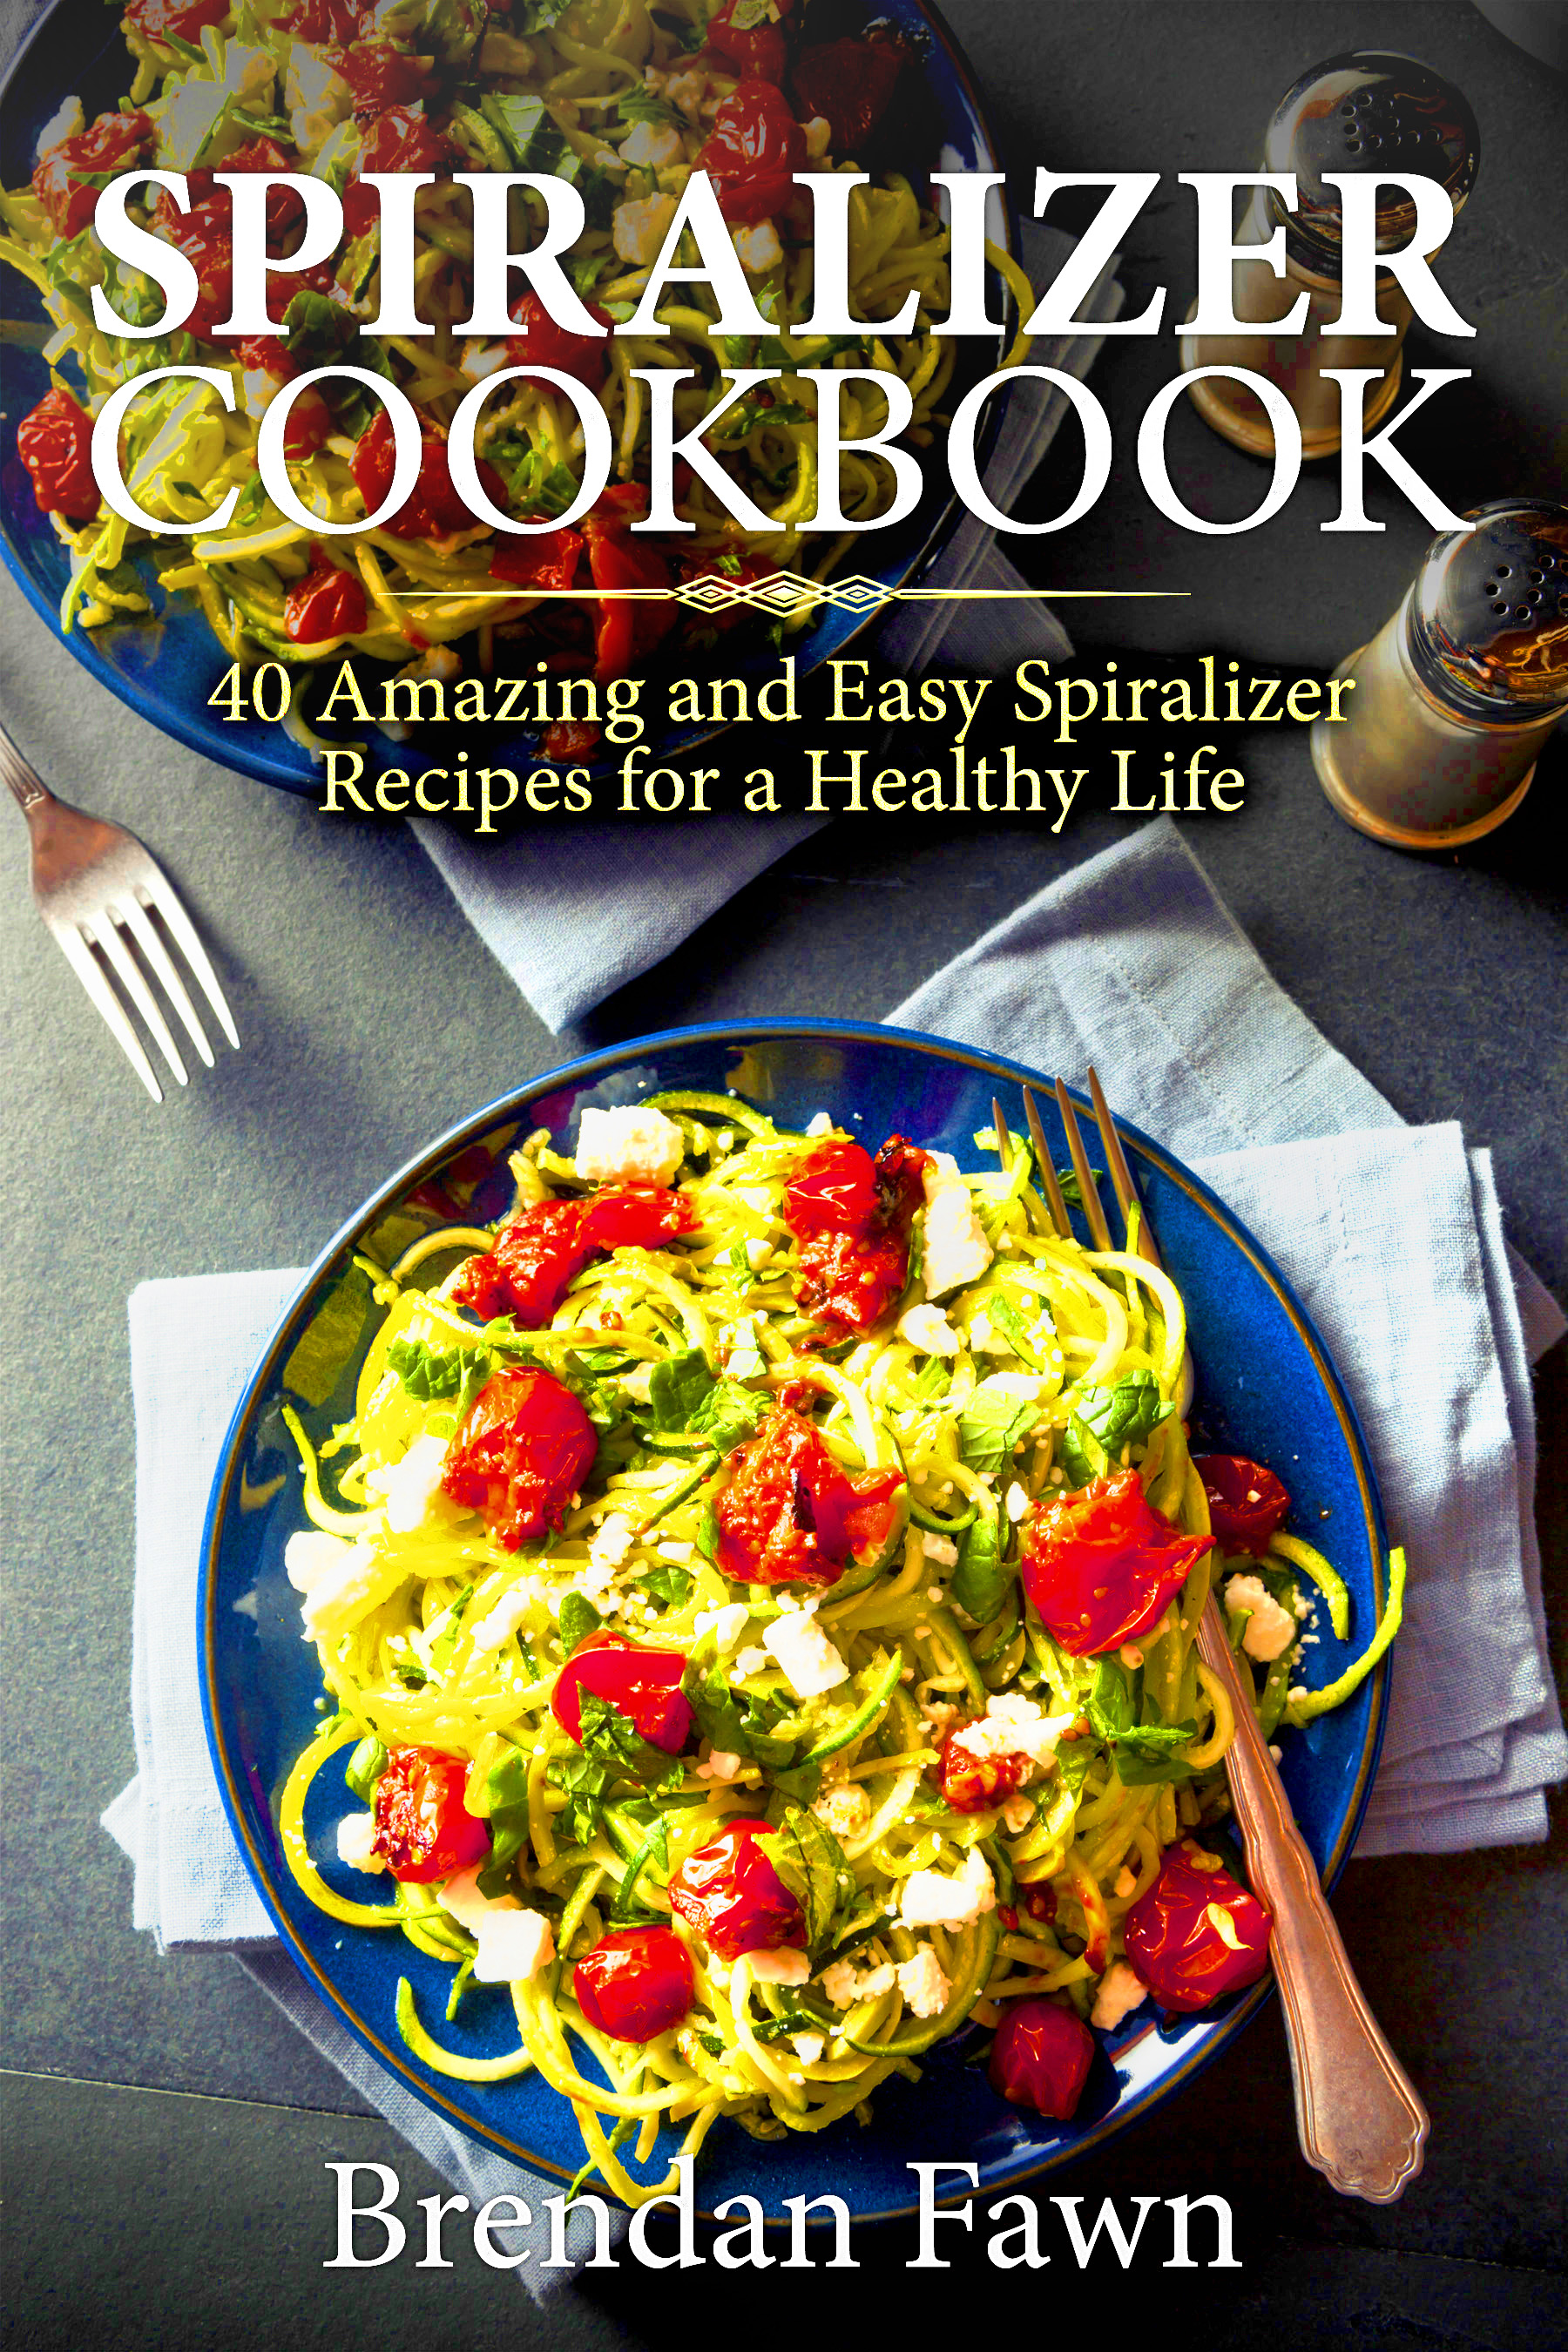 FREE: Spiralizer Cookbook by Brendan Fawn